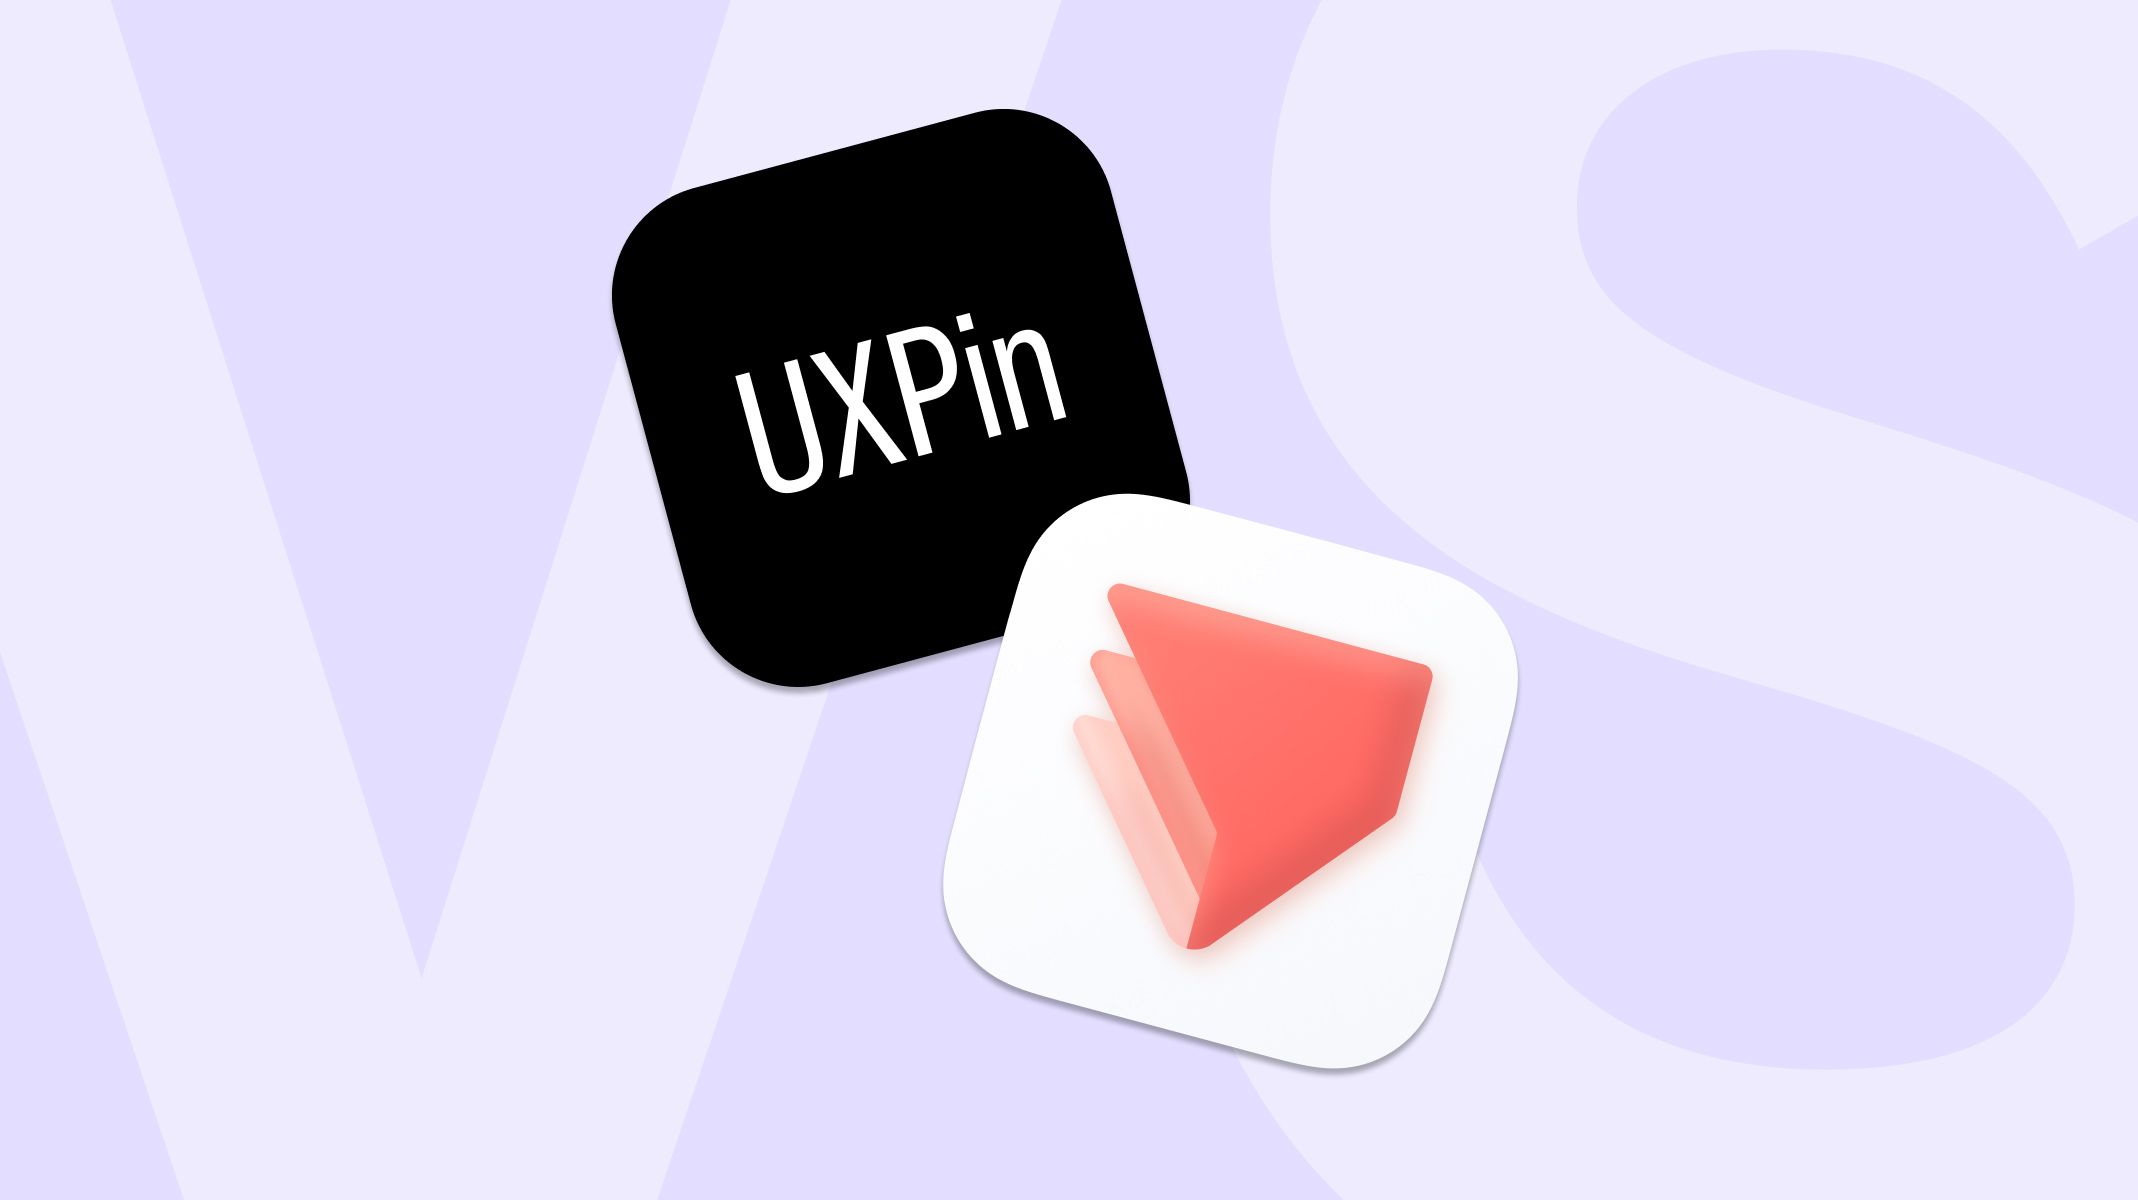 protopie and uxpin logos